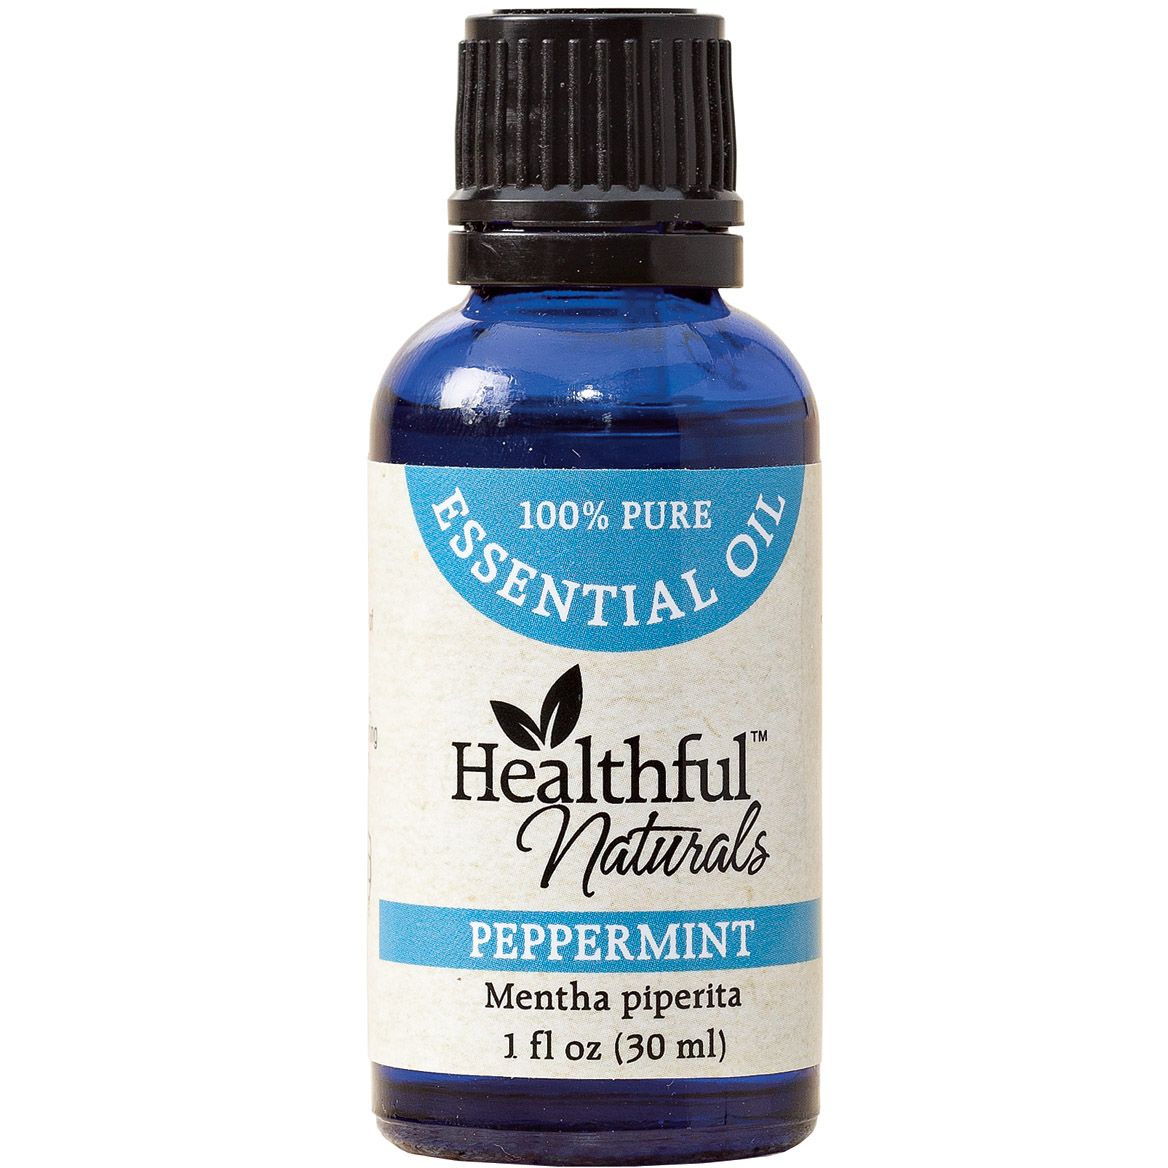 Healthful™ Naturals Peppermint Essential Oil - 30 ml + '-' + 353460